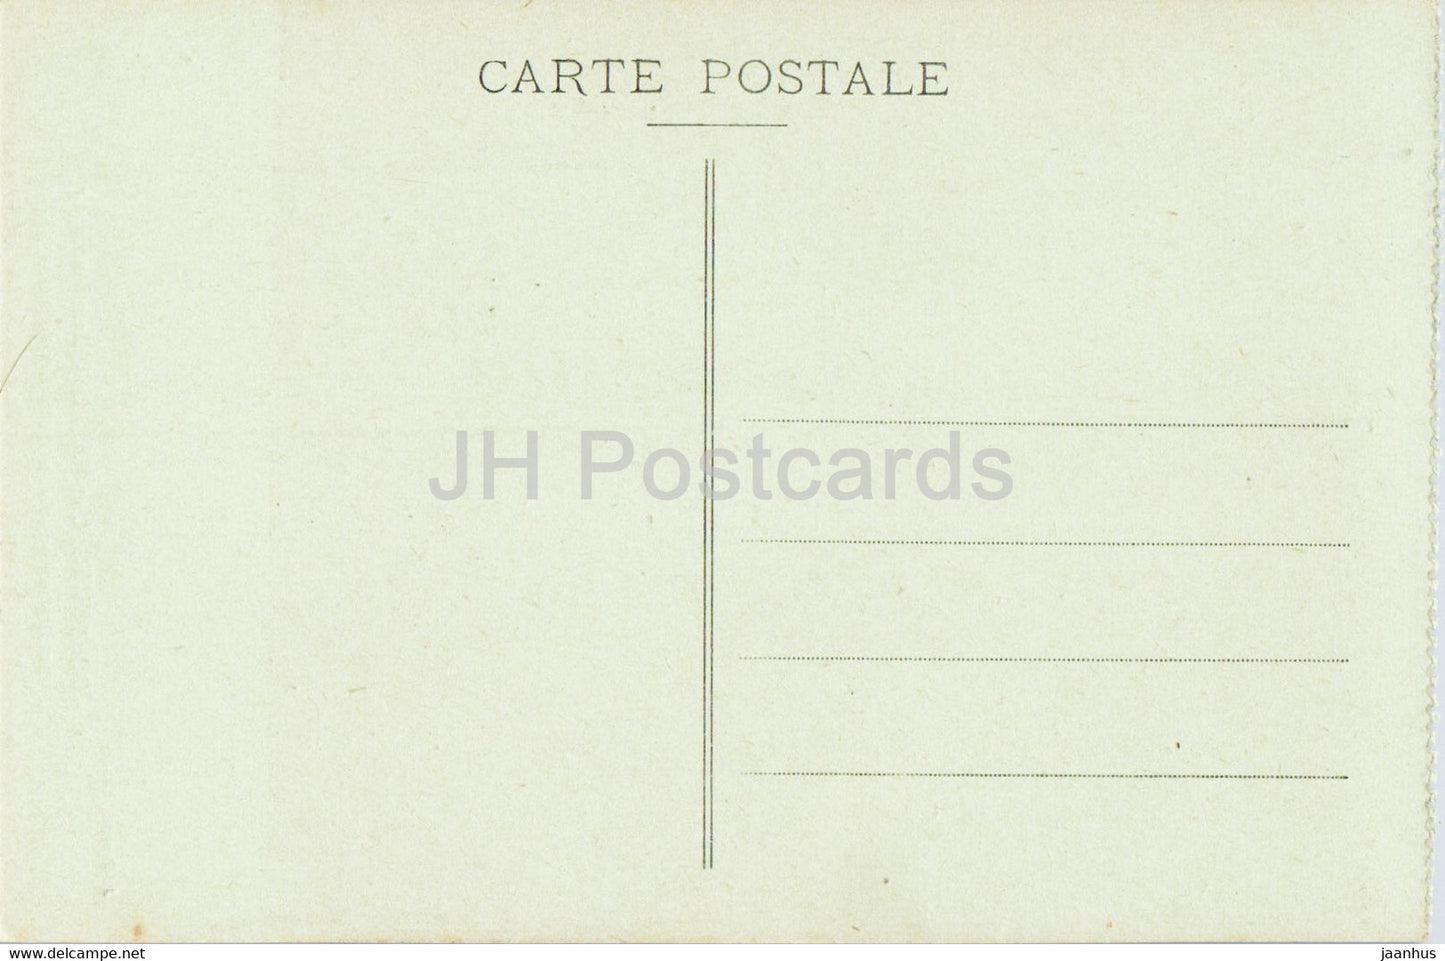 Combourg - Le Chateau interieur - La Bibliotheque - library - castle - 30 - old postcard - France - unused